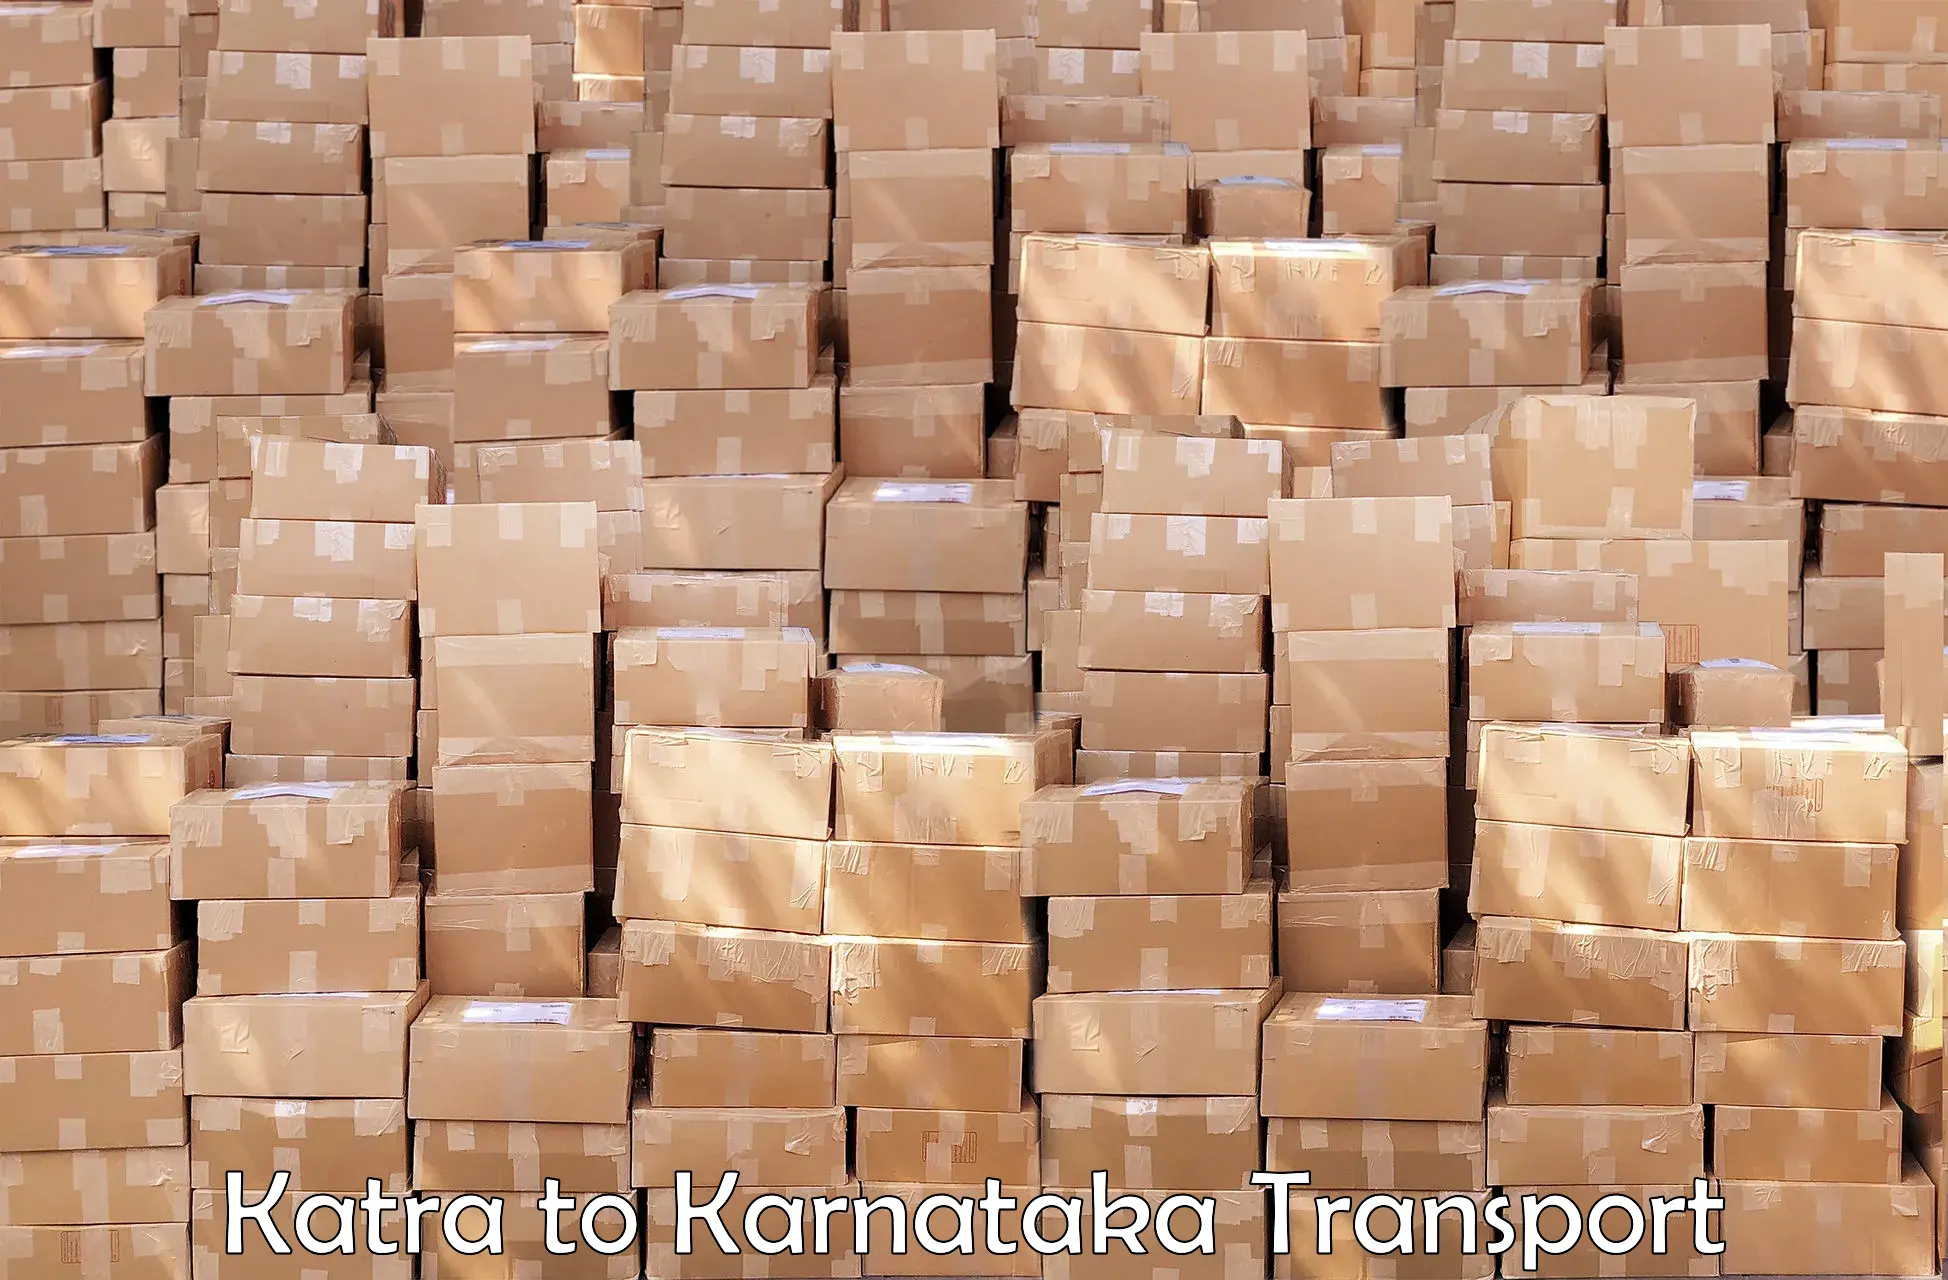 Bike shipping service Katra to Manipal